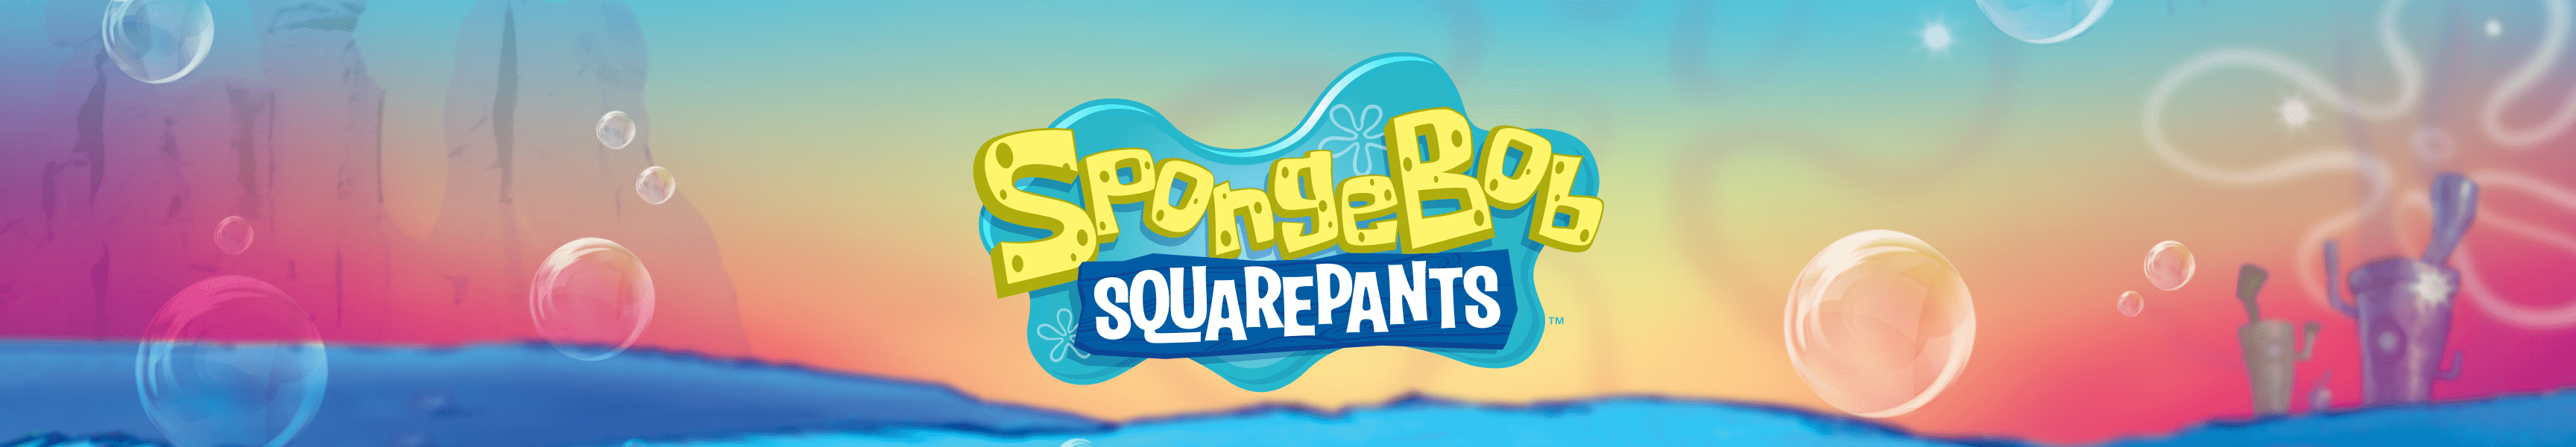 SpongeBob SquarePants $50 - $100